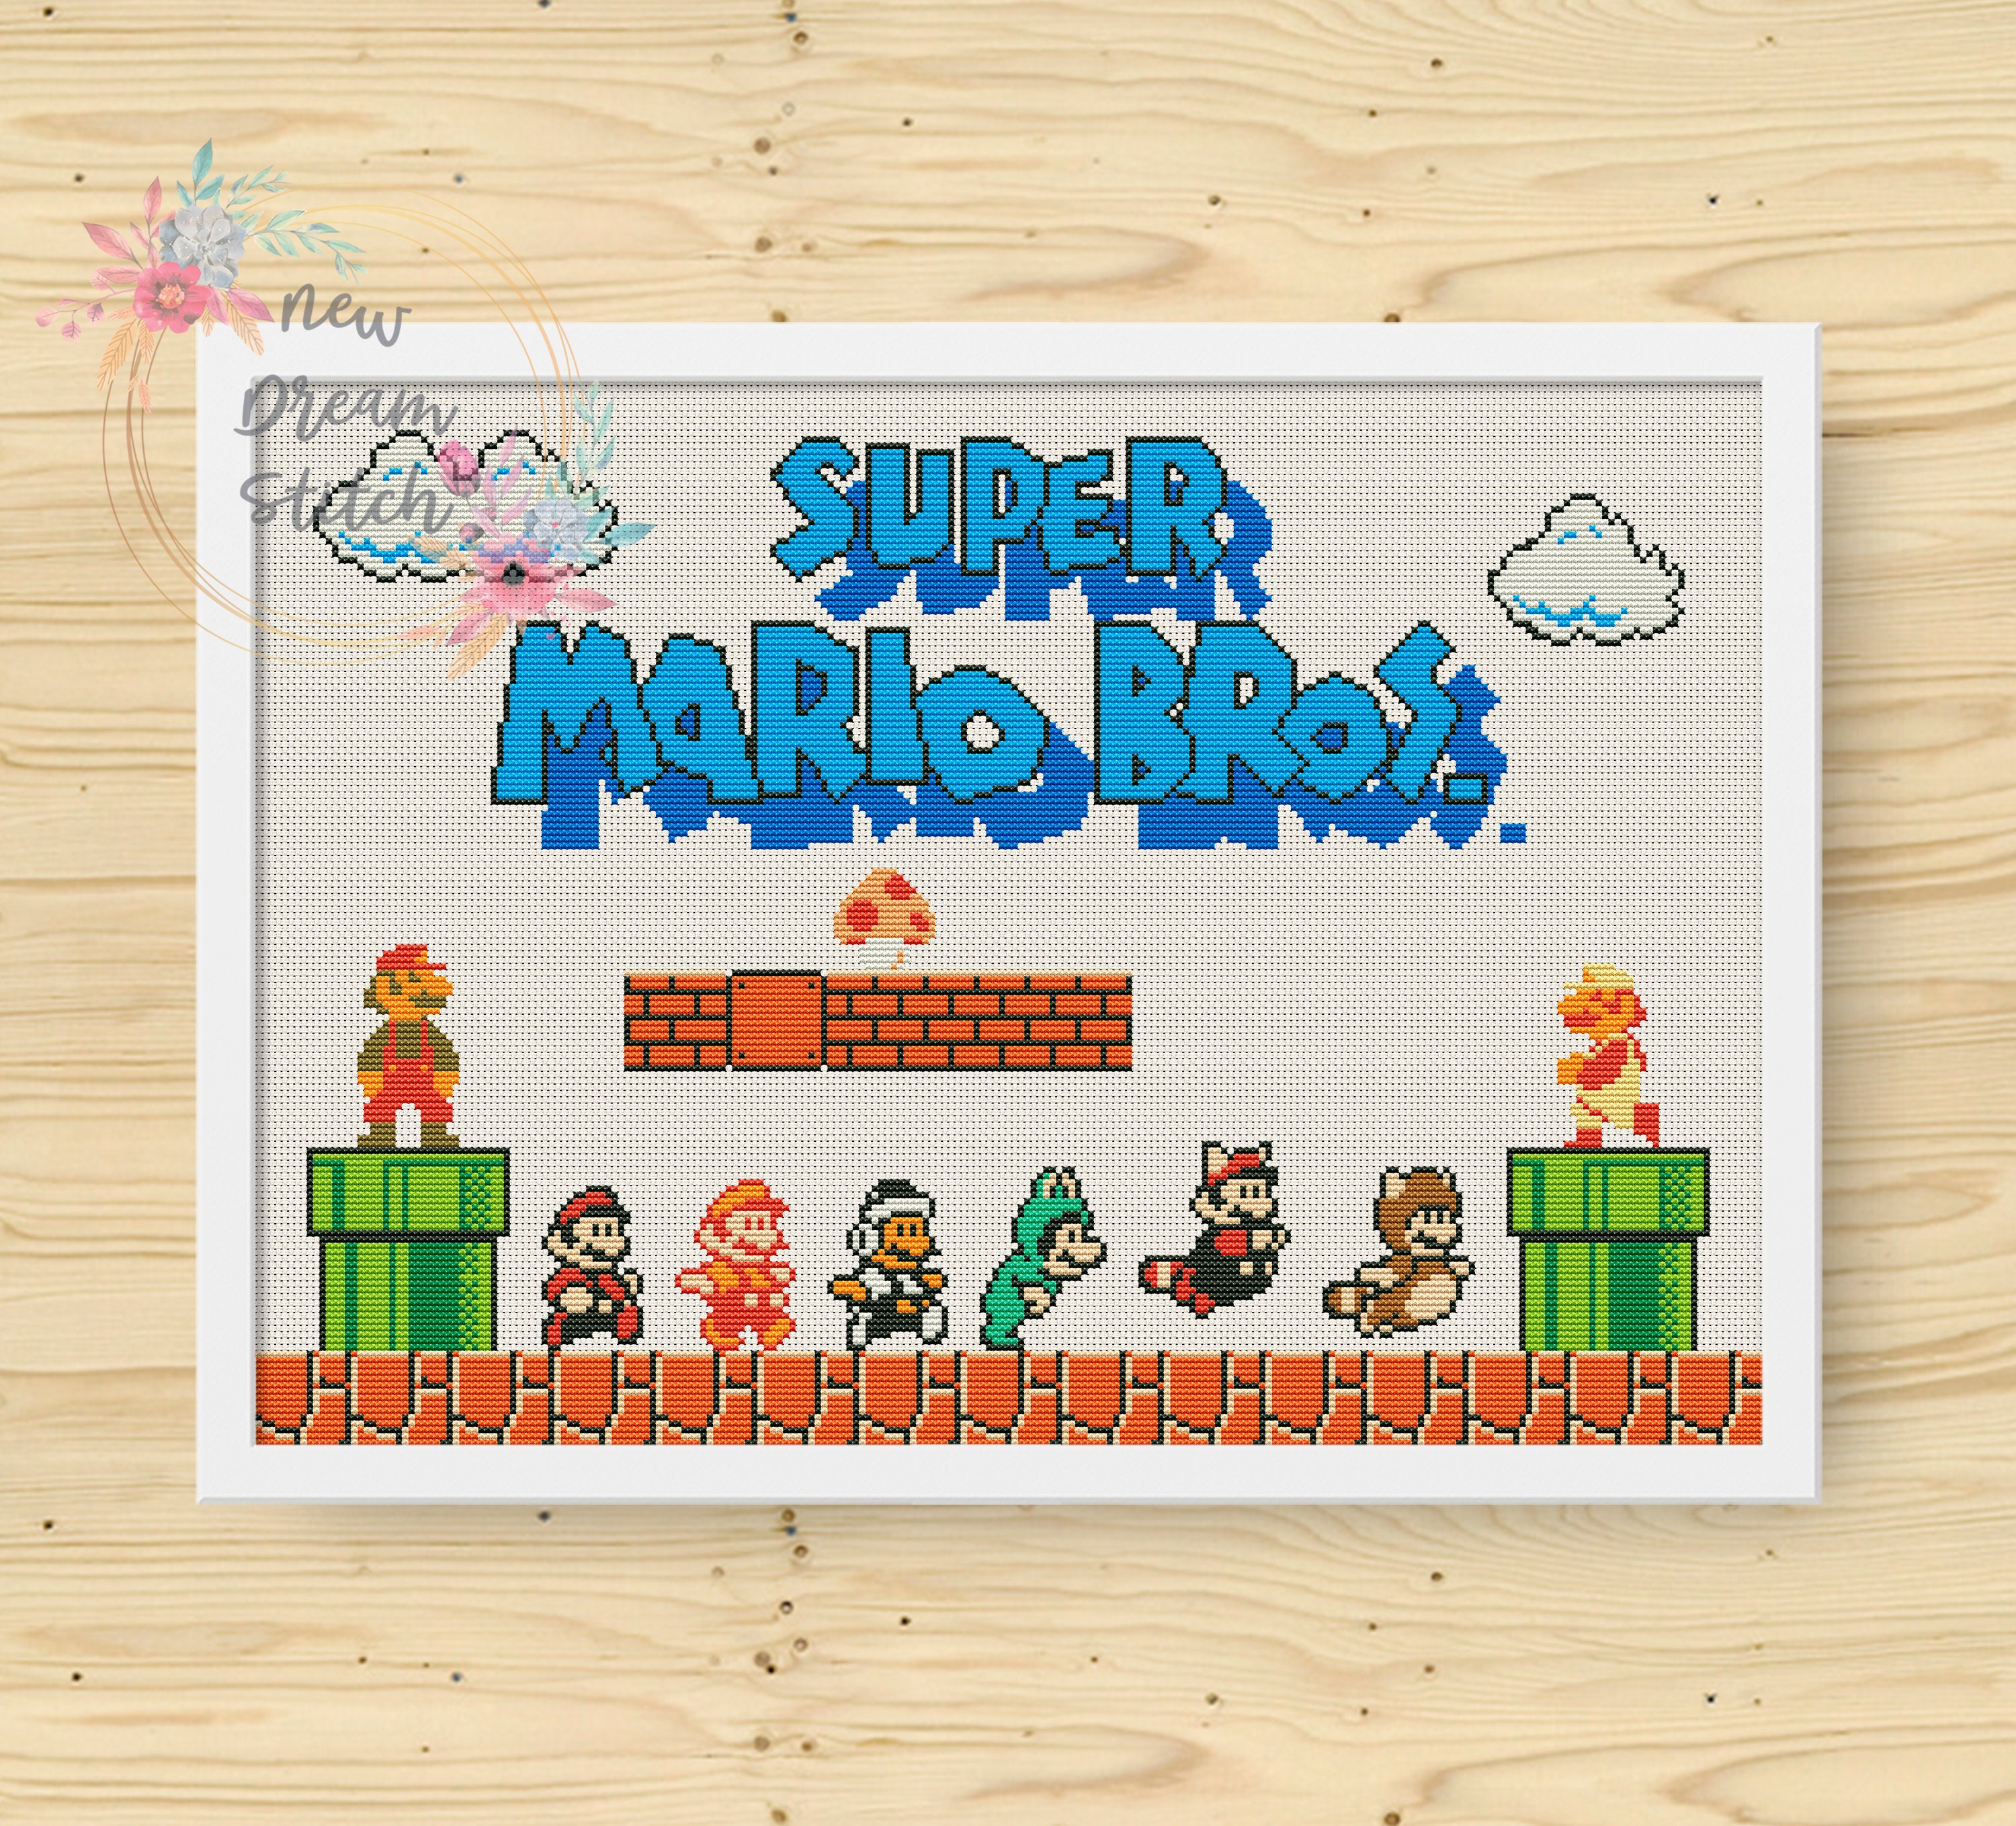 4th Grade Math Pixel Art BUNDLE Super Mario / Minecraft Mystery Pictures